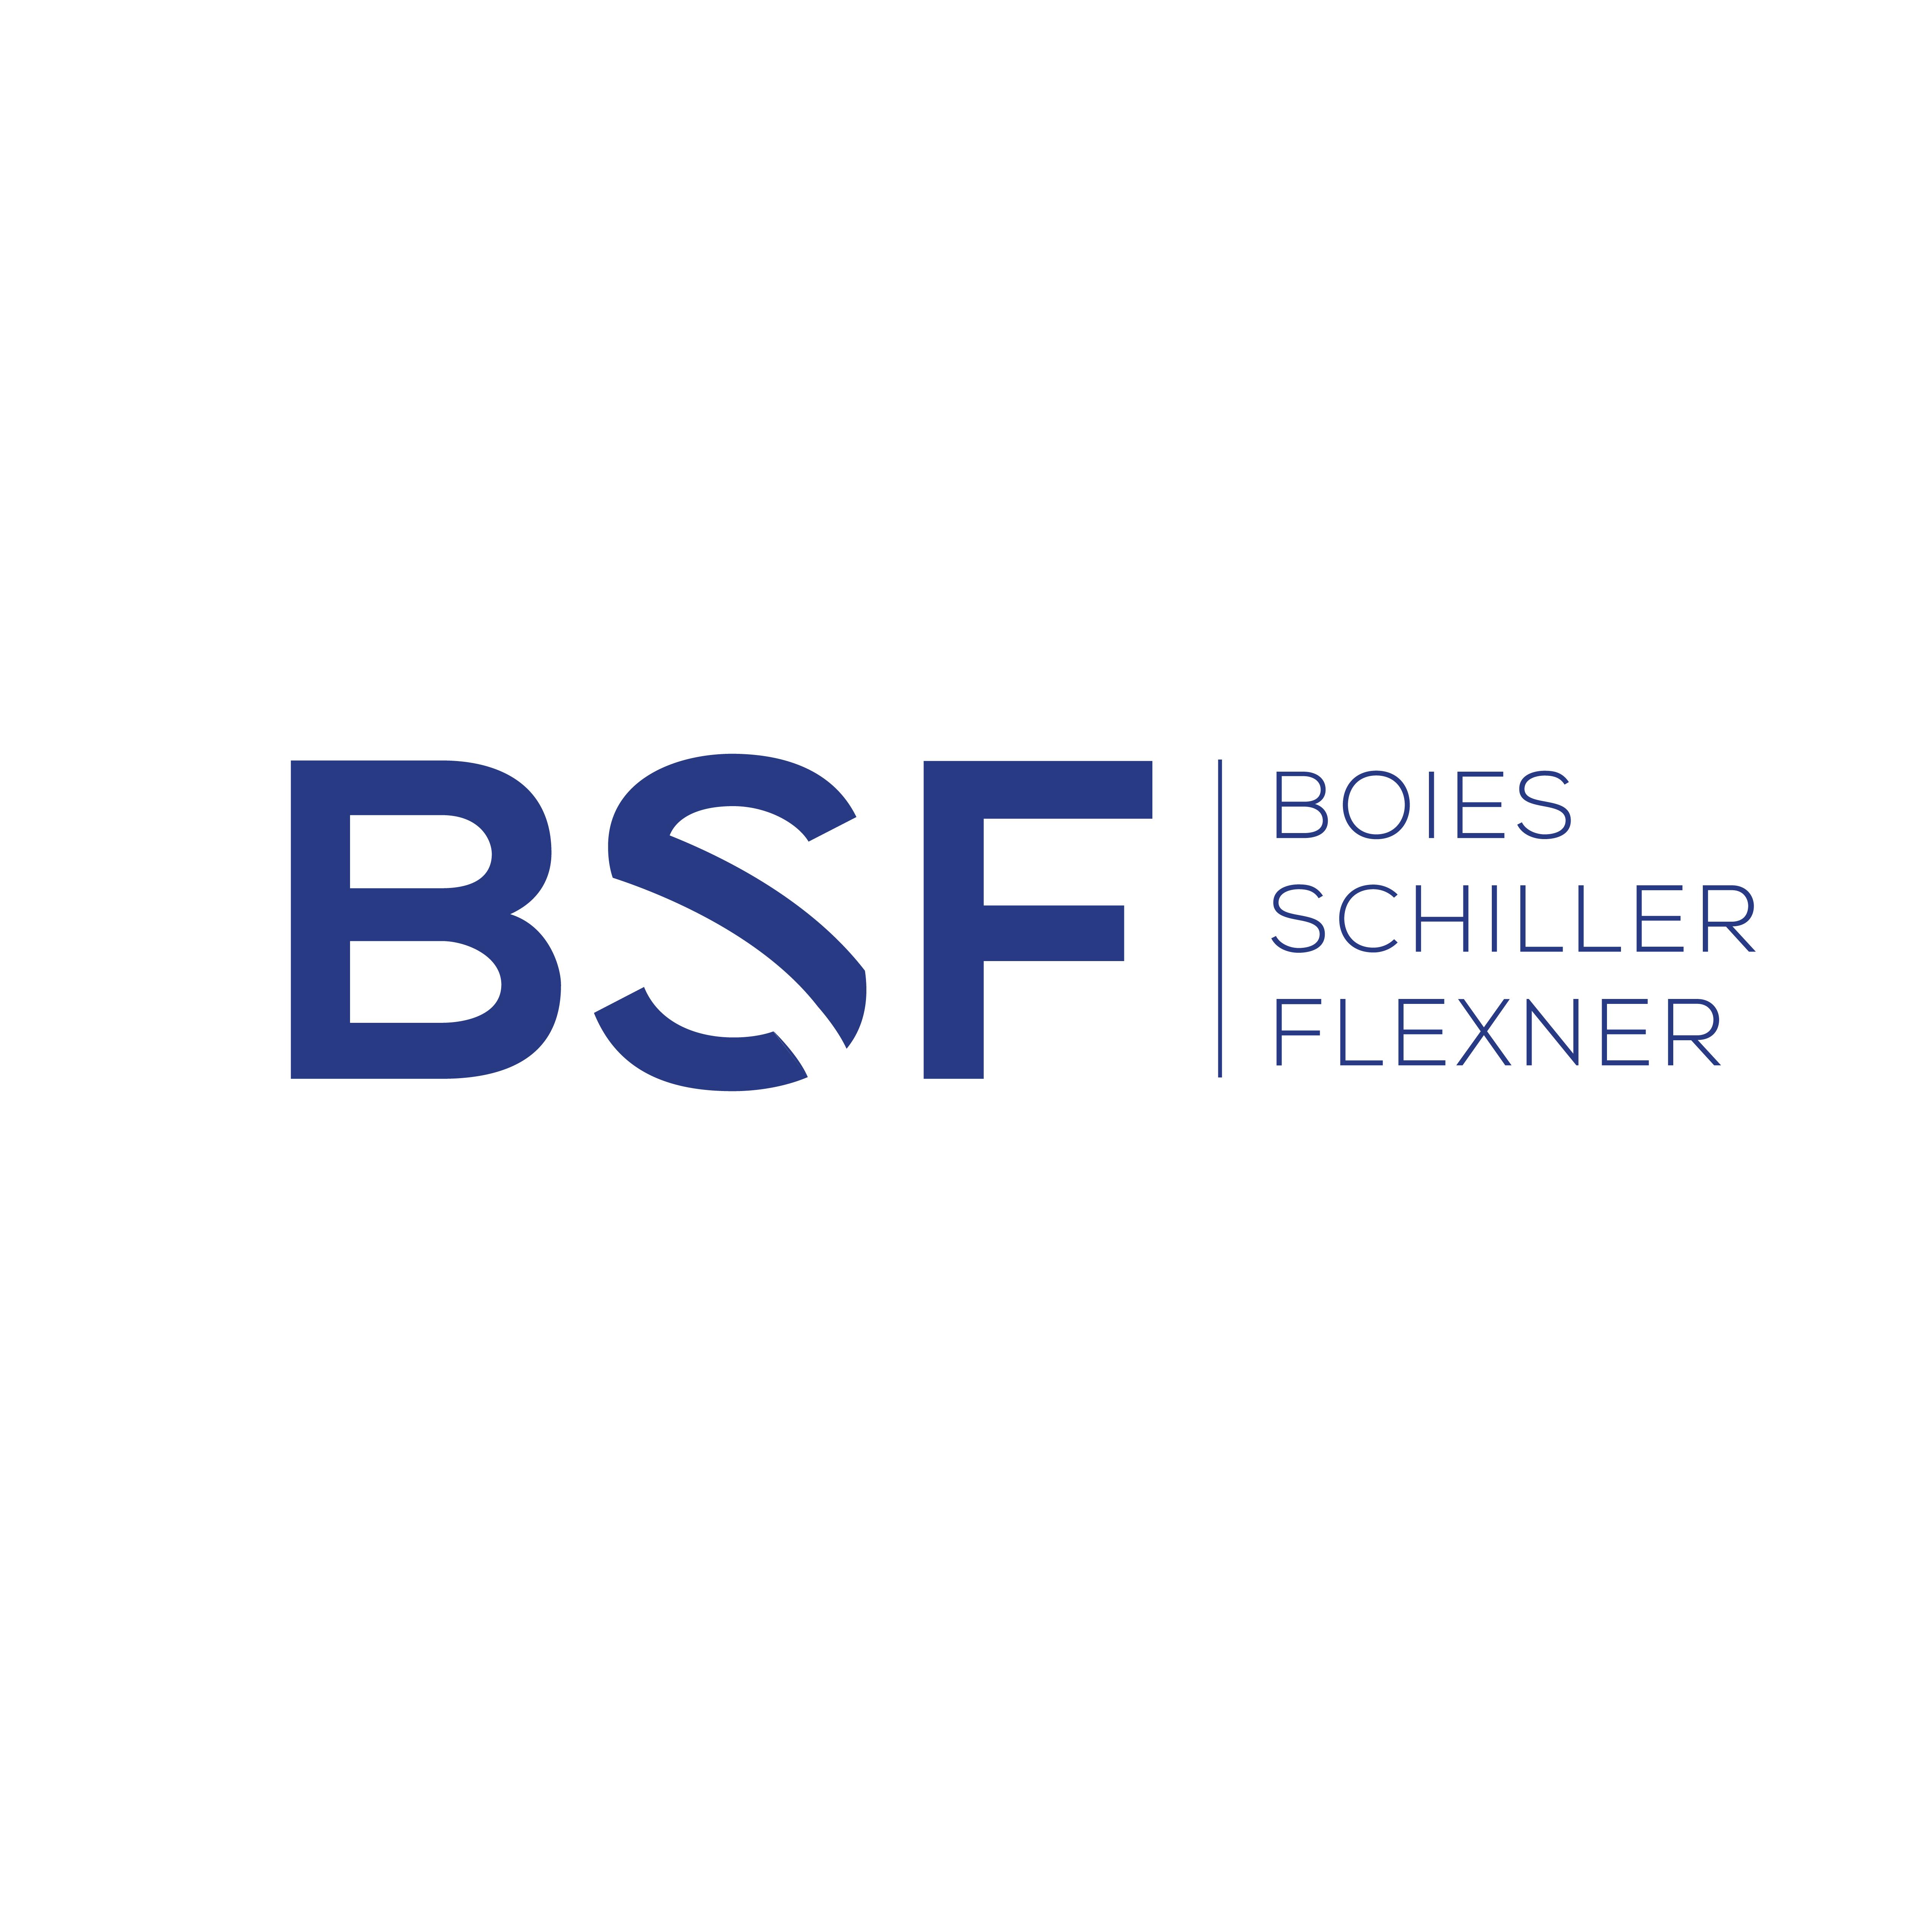 Boies Schiller Flexner